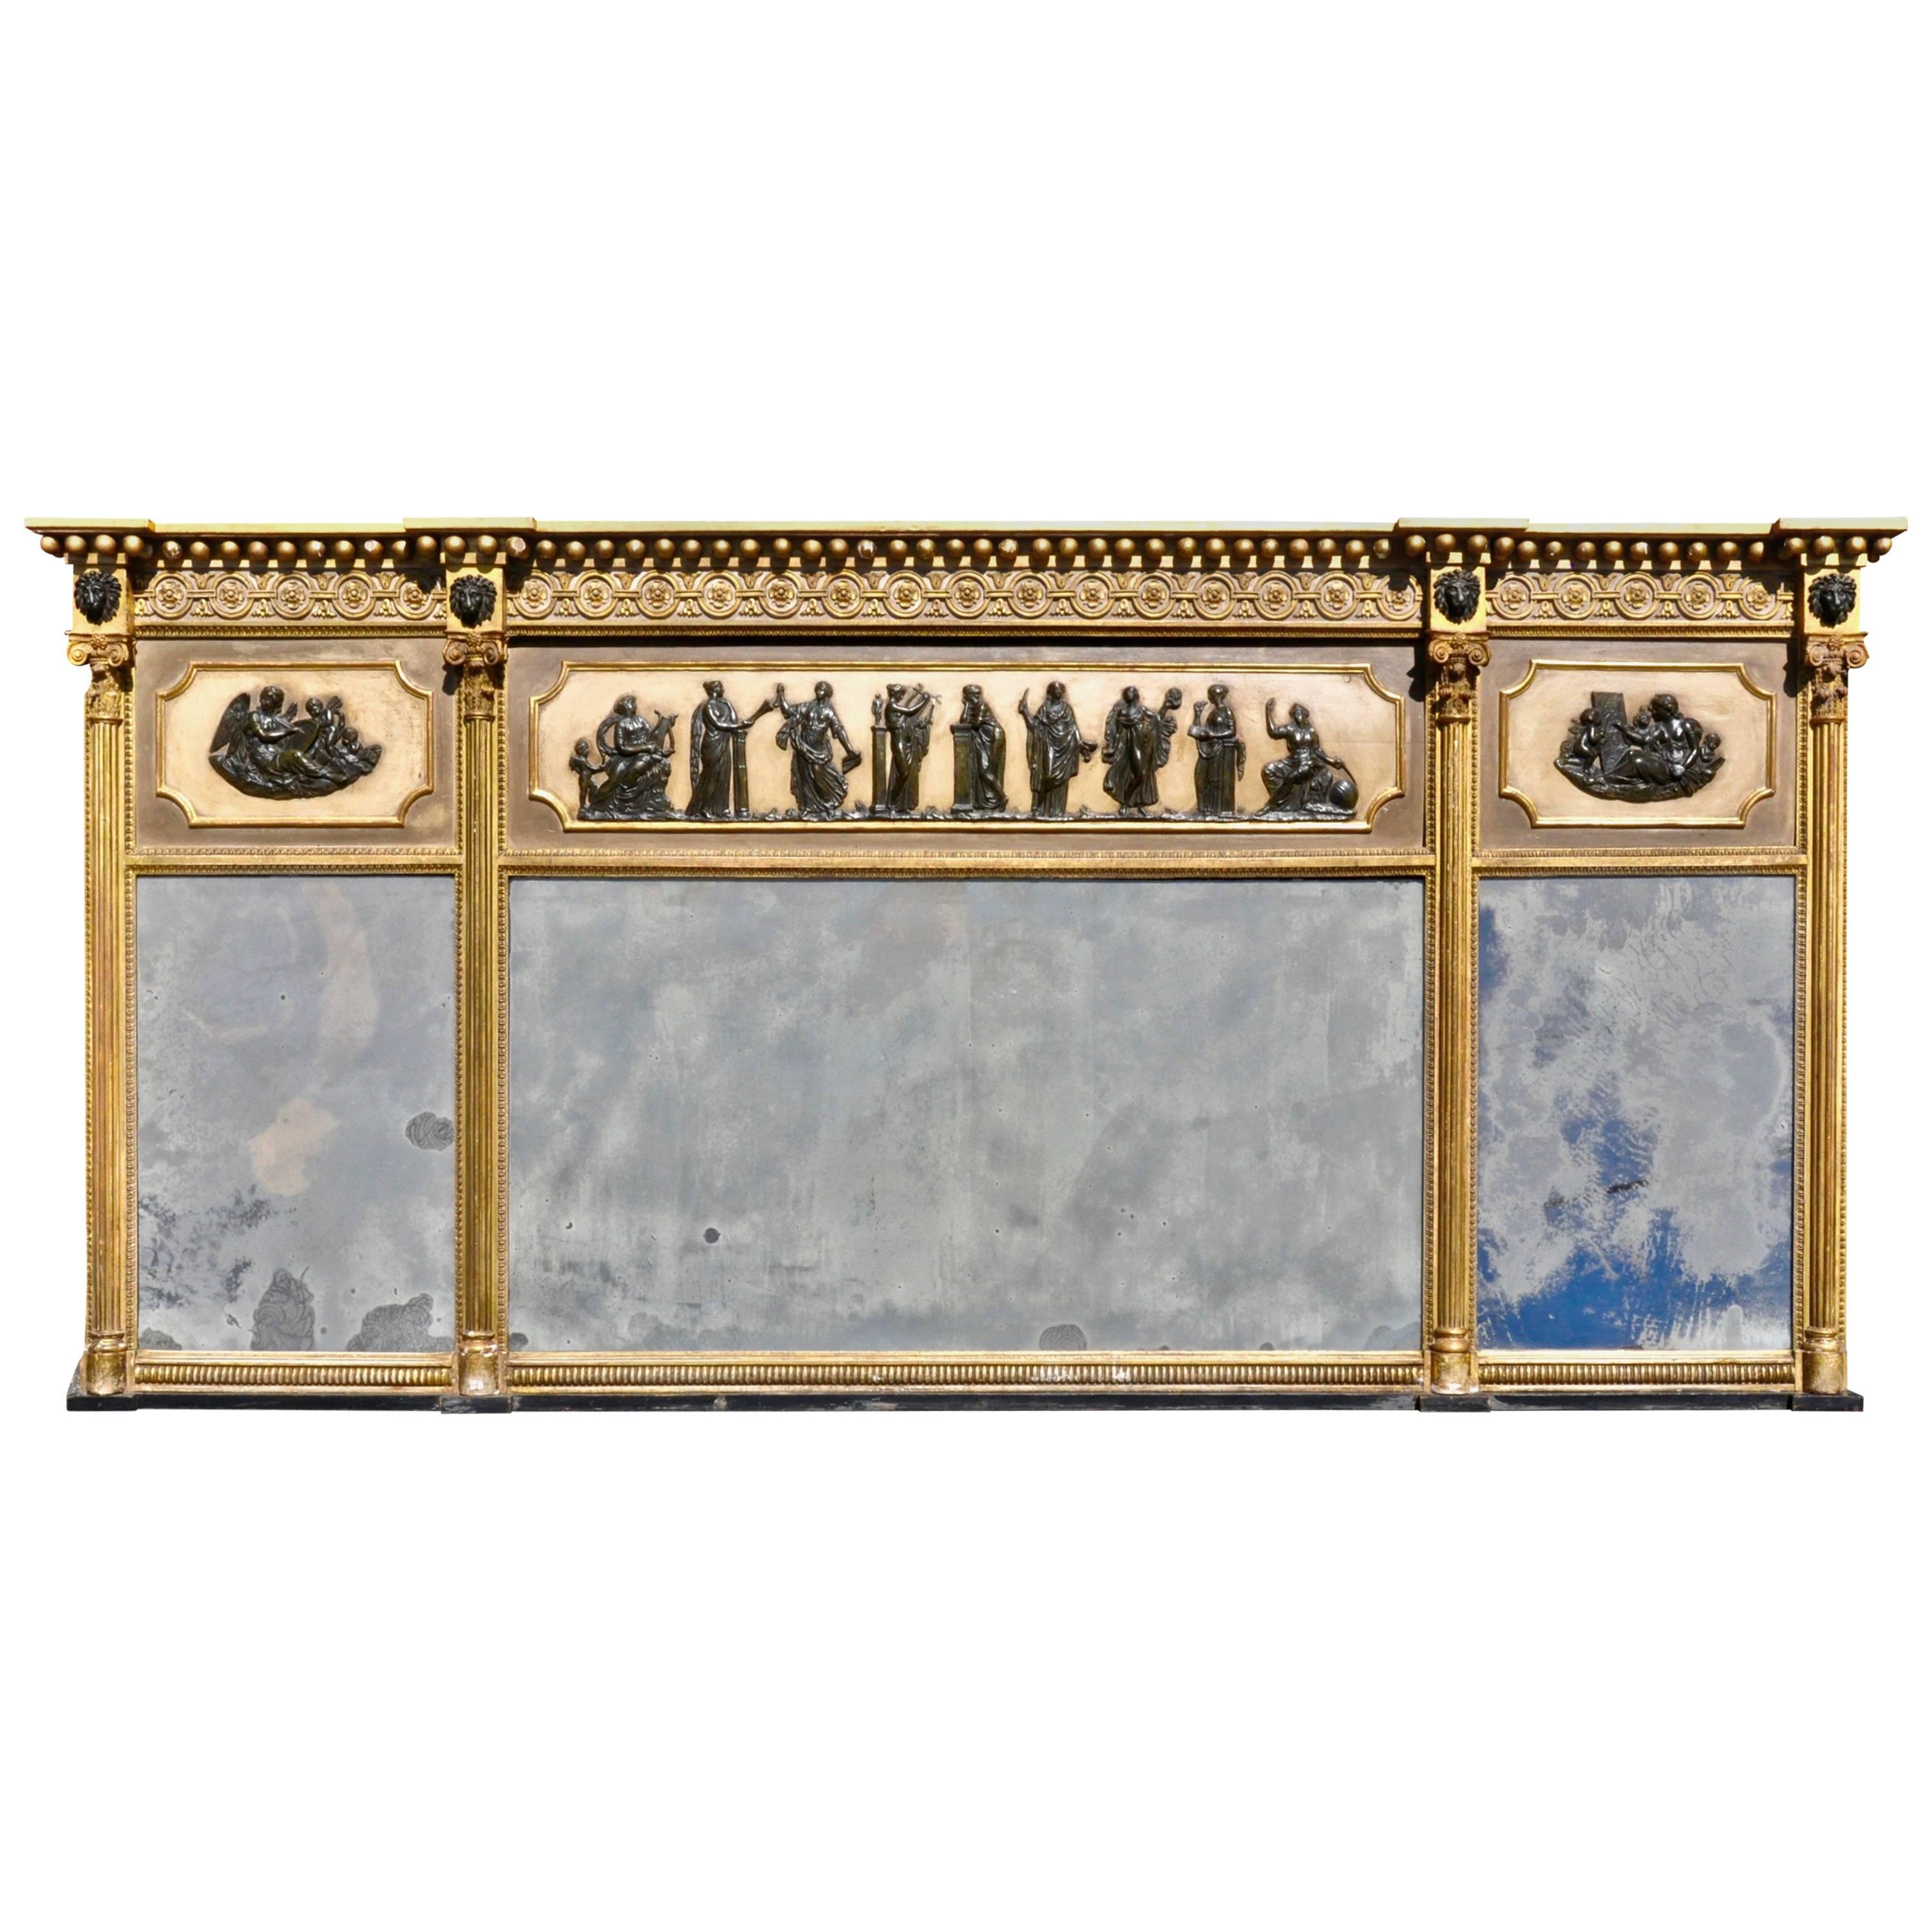 Neoklassischer Kaminsimsspiegel aus der Regency-Periode, komplett original